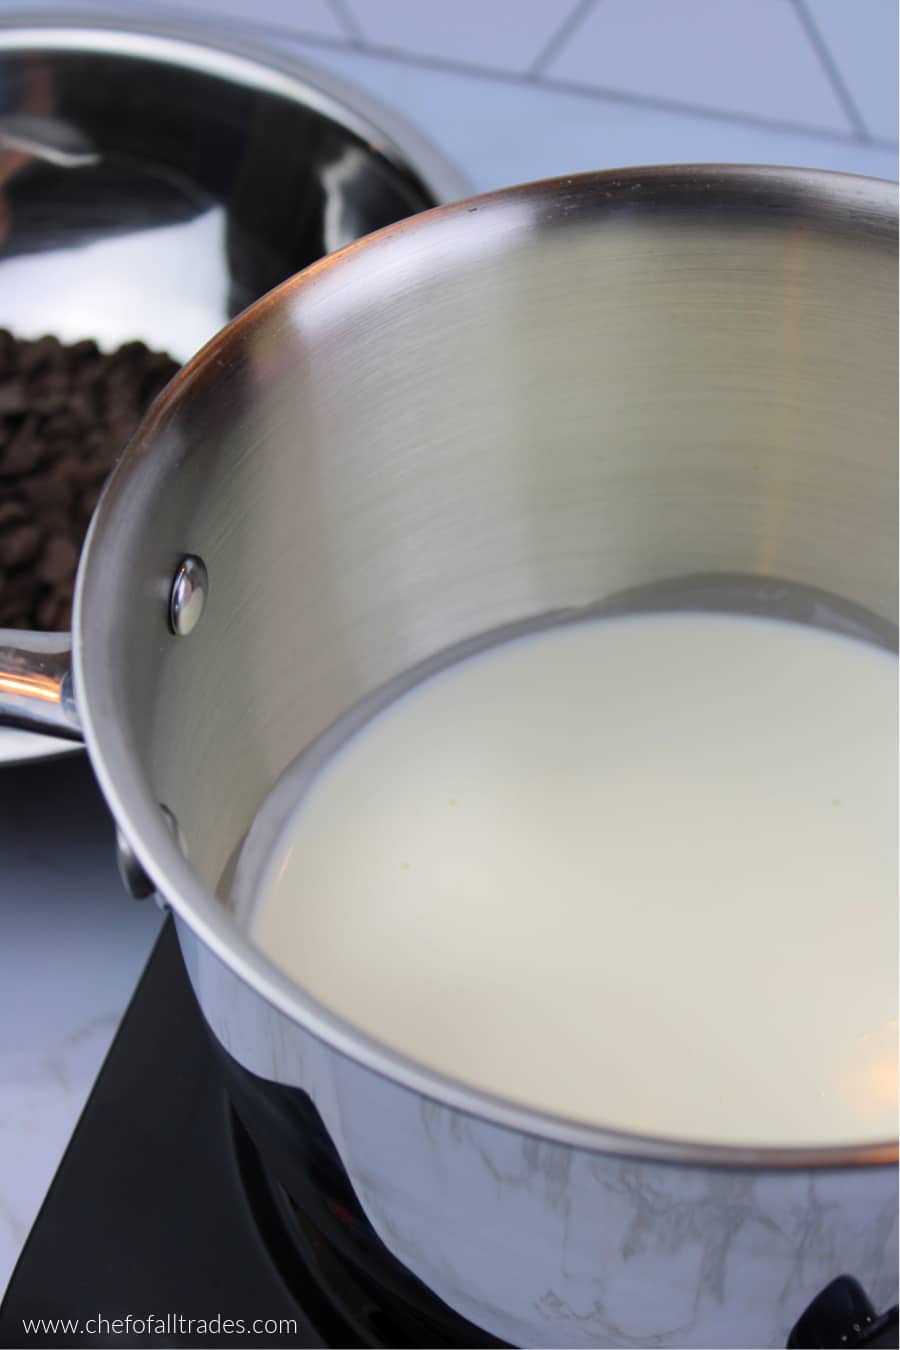 heavy cream heating in a pot